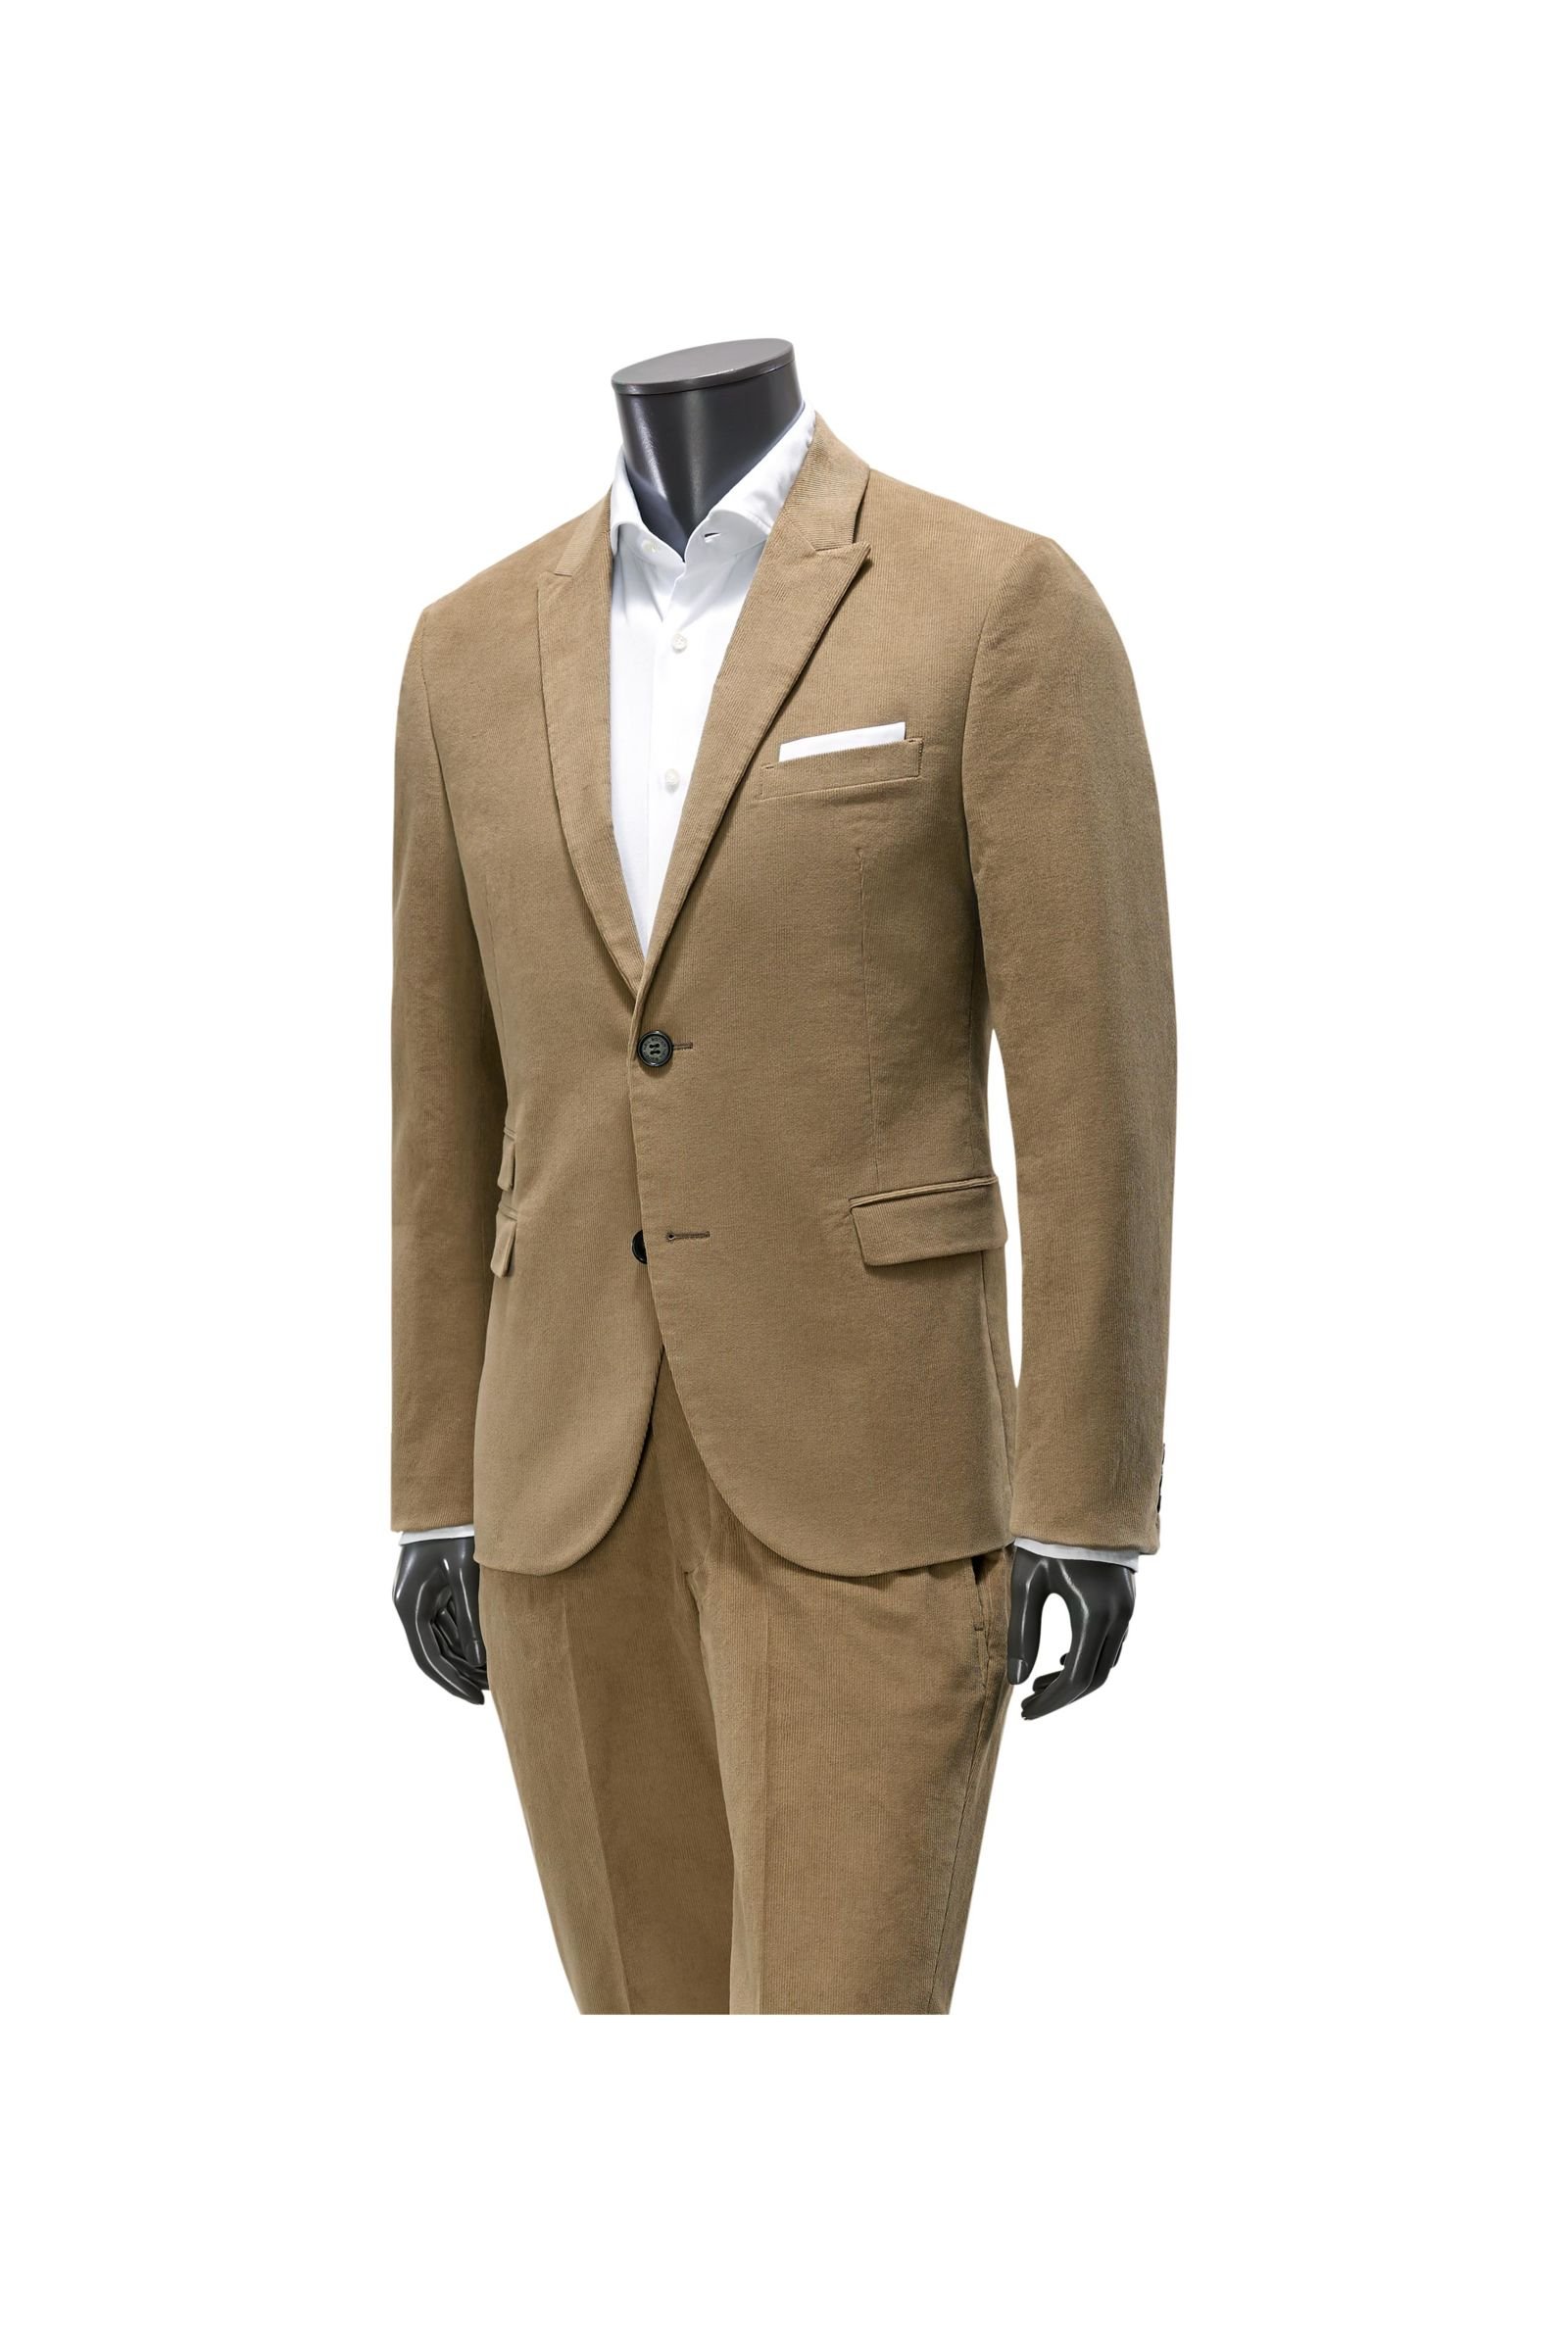 Corduroy suit light brown